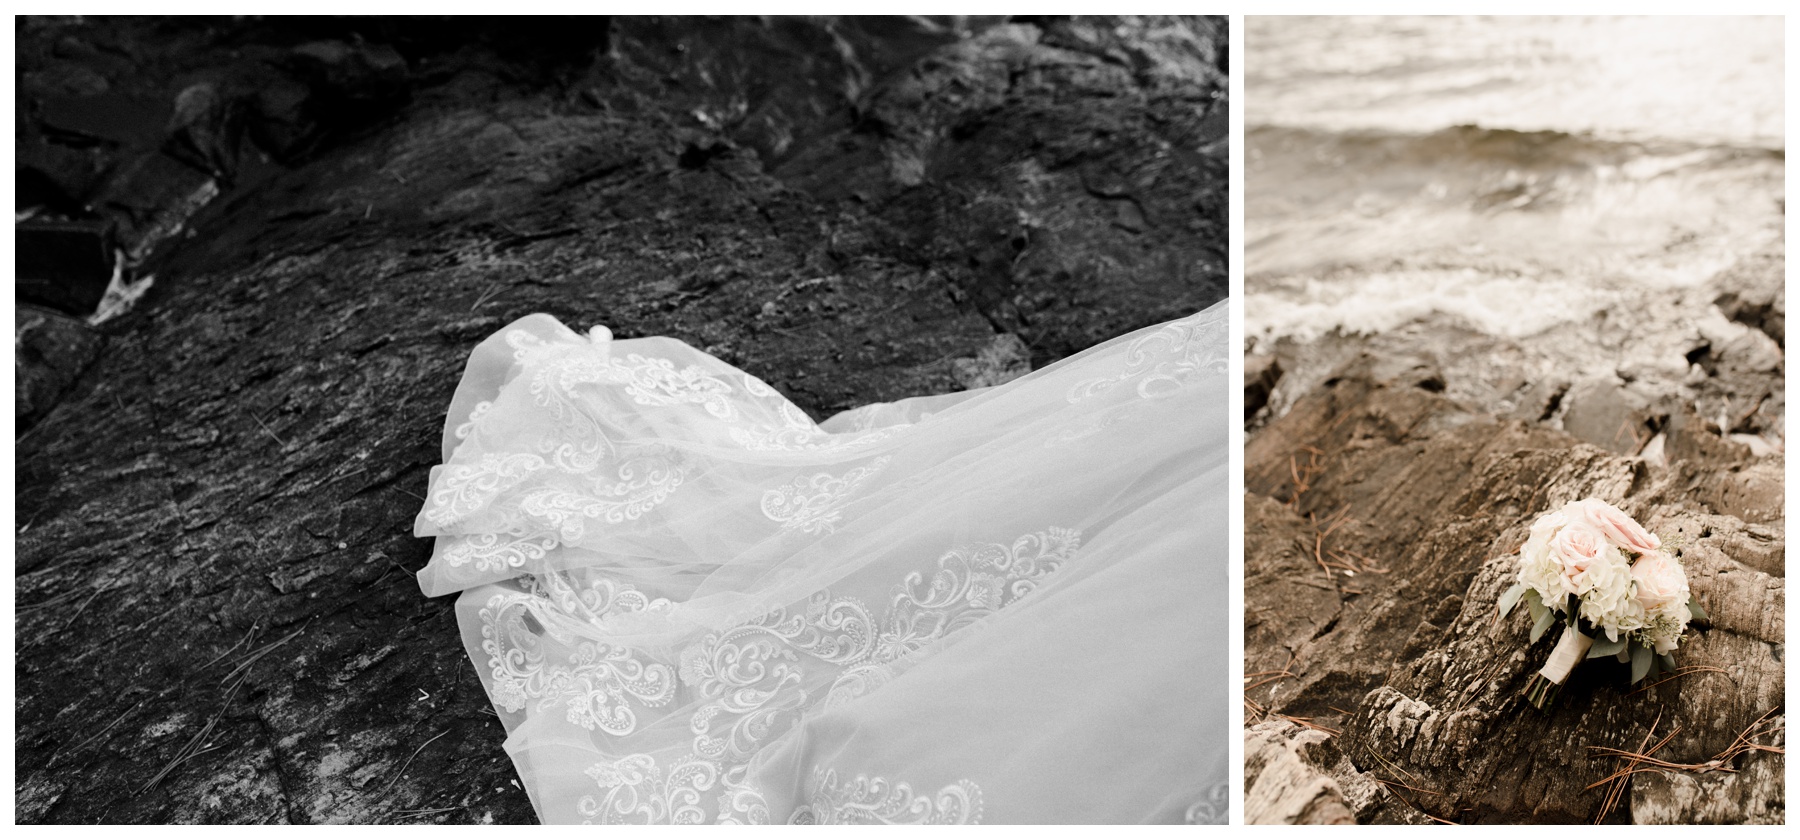 Intimate Kenora Wedding, Winnipeg Wedding Photographer, Canadian Elopement, Lakeside Wedding Canada, The Broken Paddle Kenora, Beach wedding, Vanessa Renae Photography